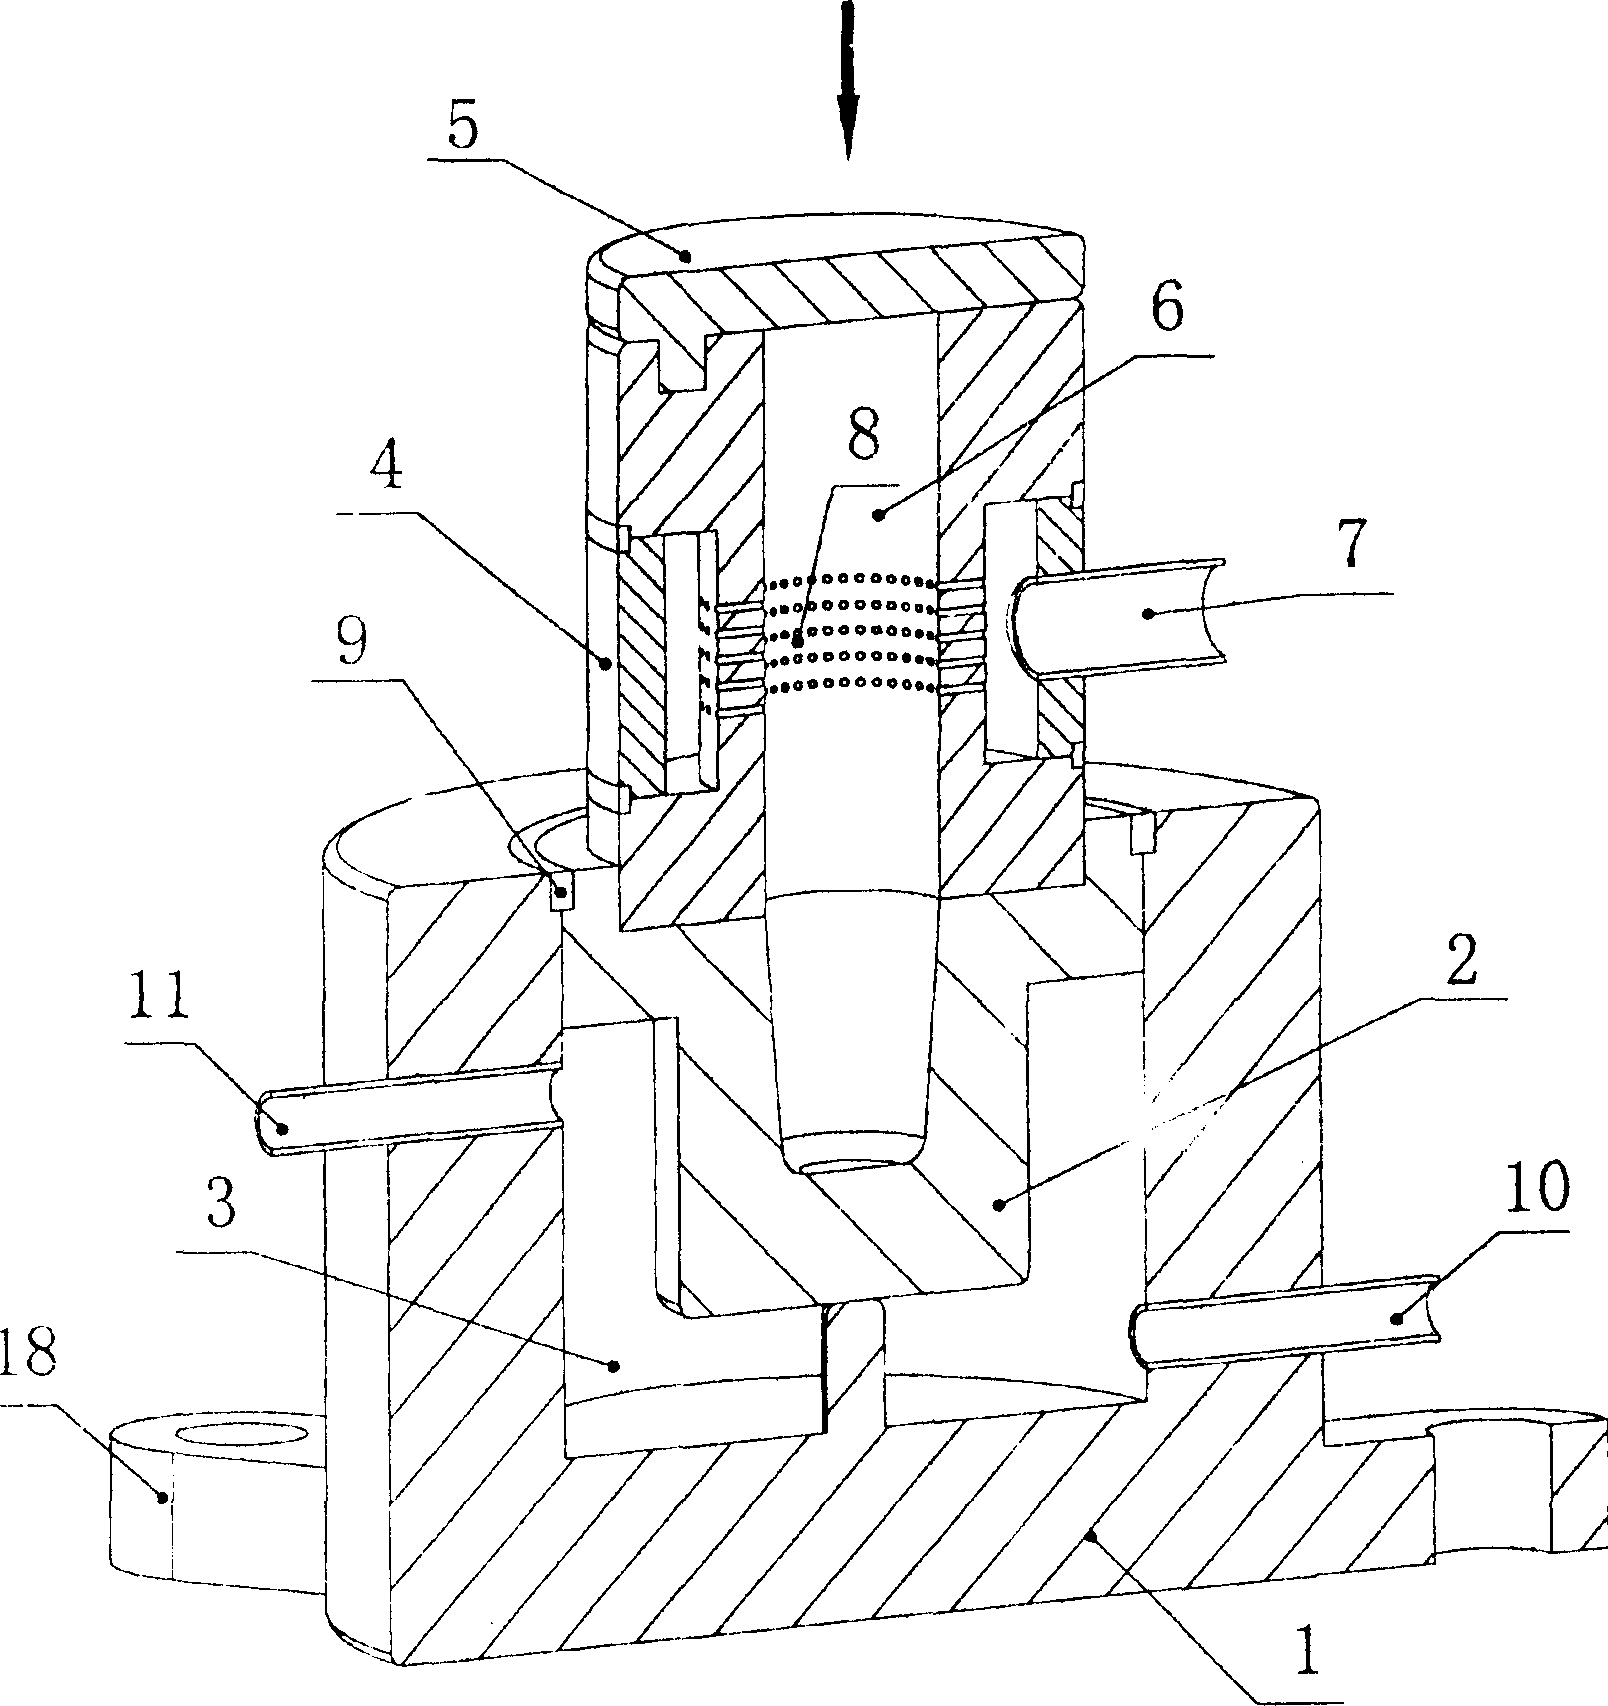 Laser smelting furnace with water cooled copper mould and method for smelting ingot